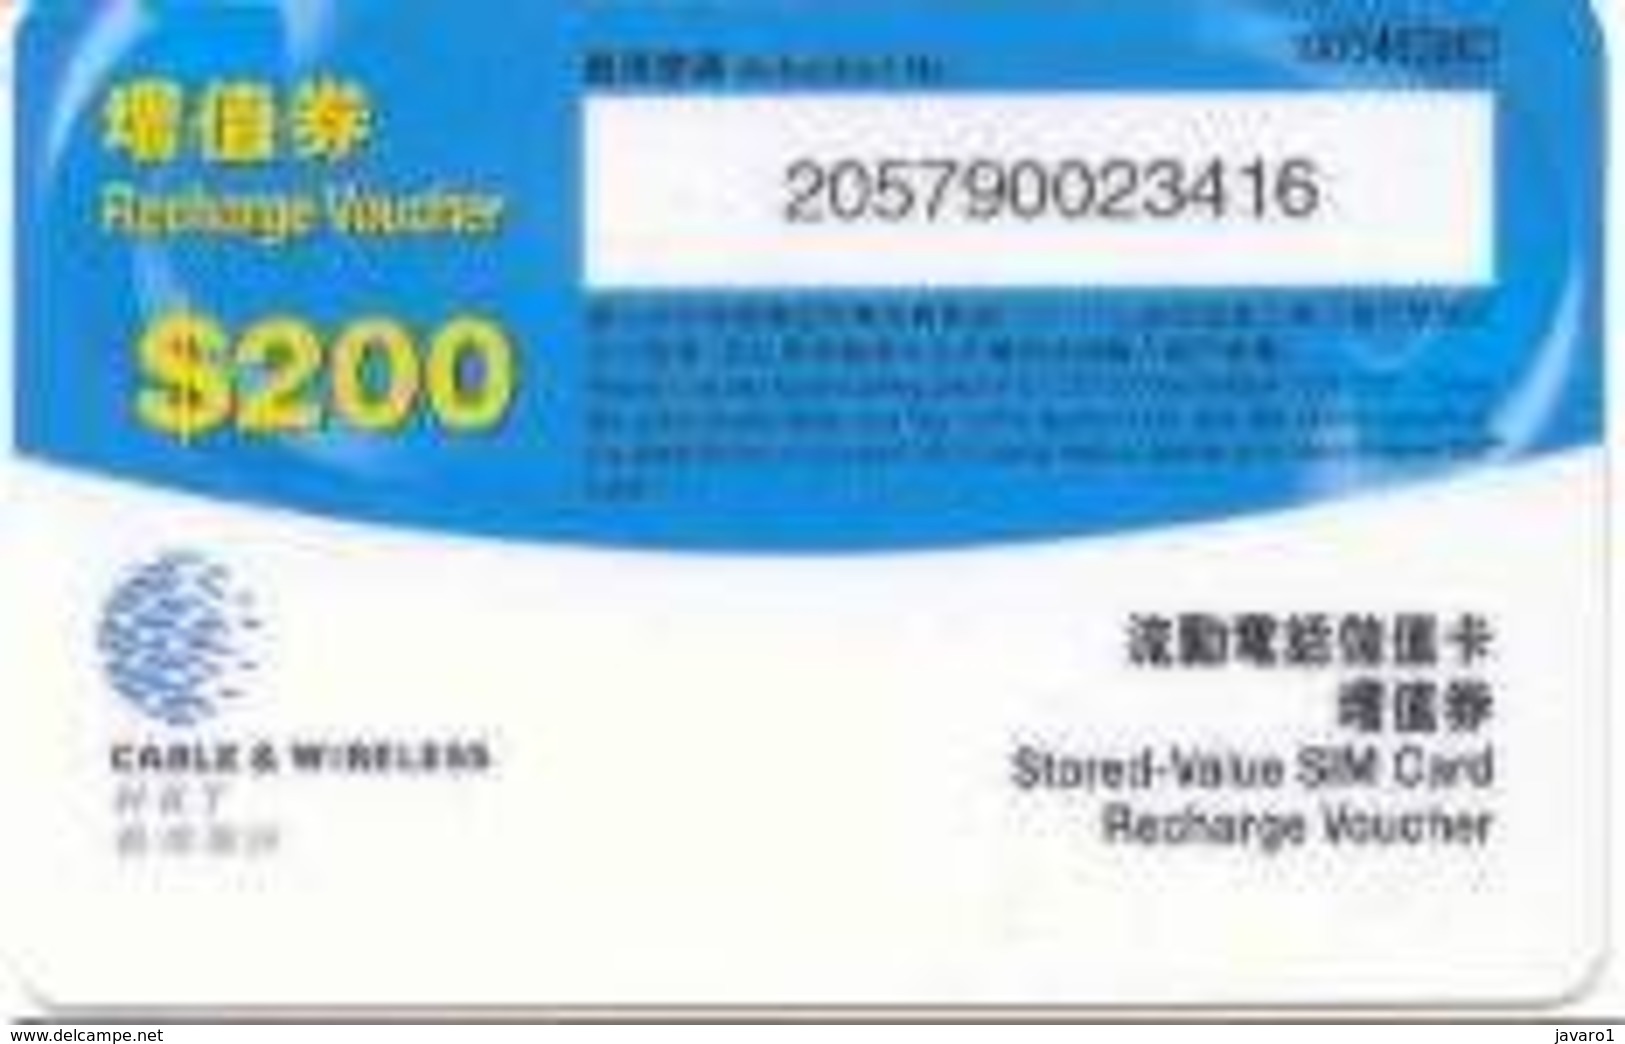 HONGKONG : HKG10 $200 C+W HKY Recharge Voucher USED - Hong Kong